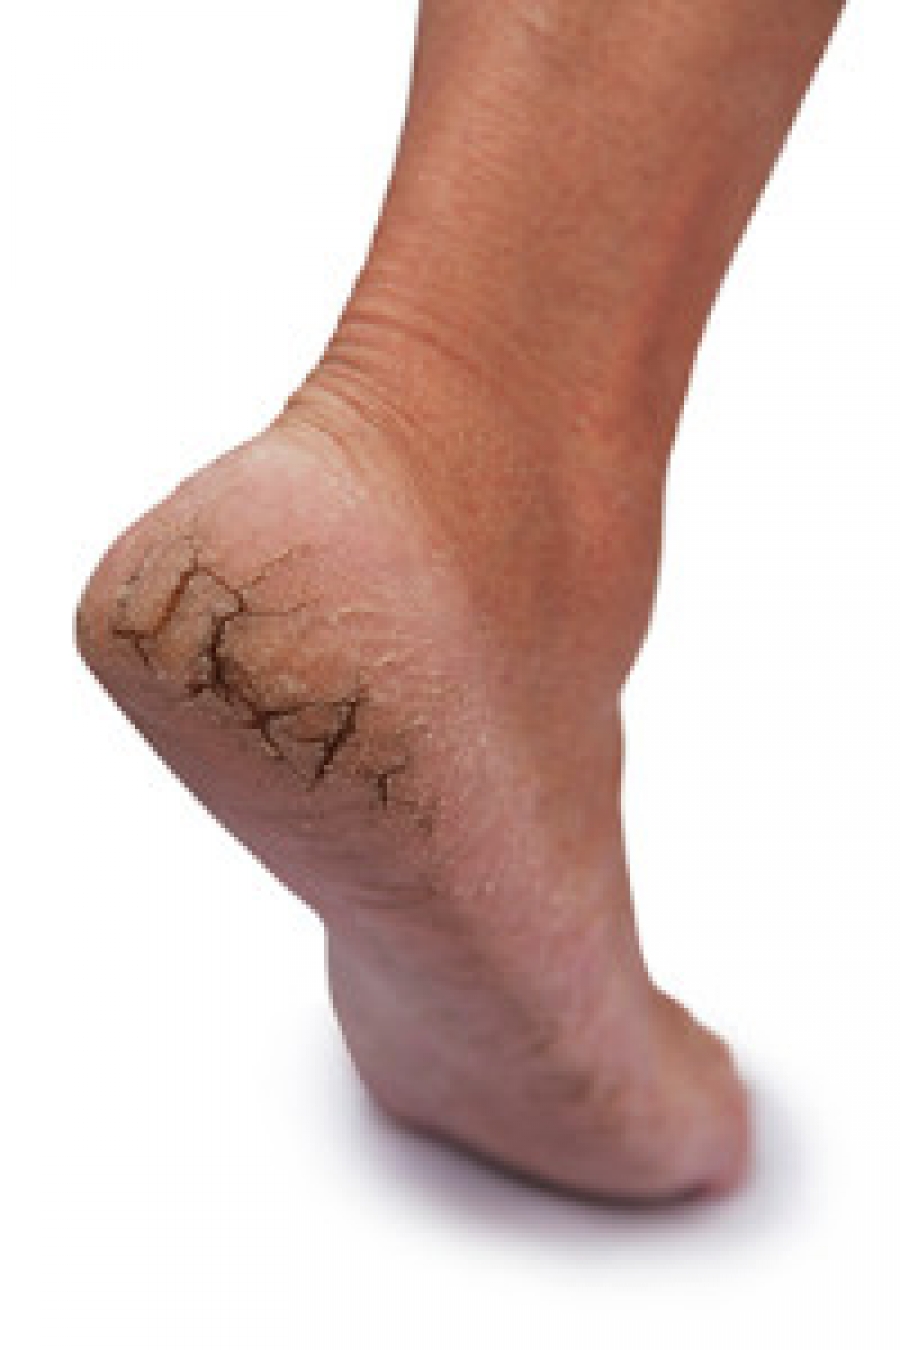 cracks in foot sole